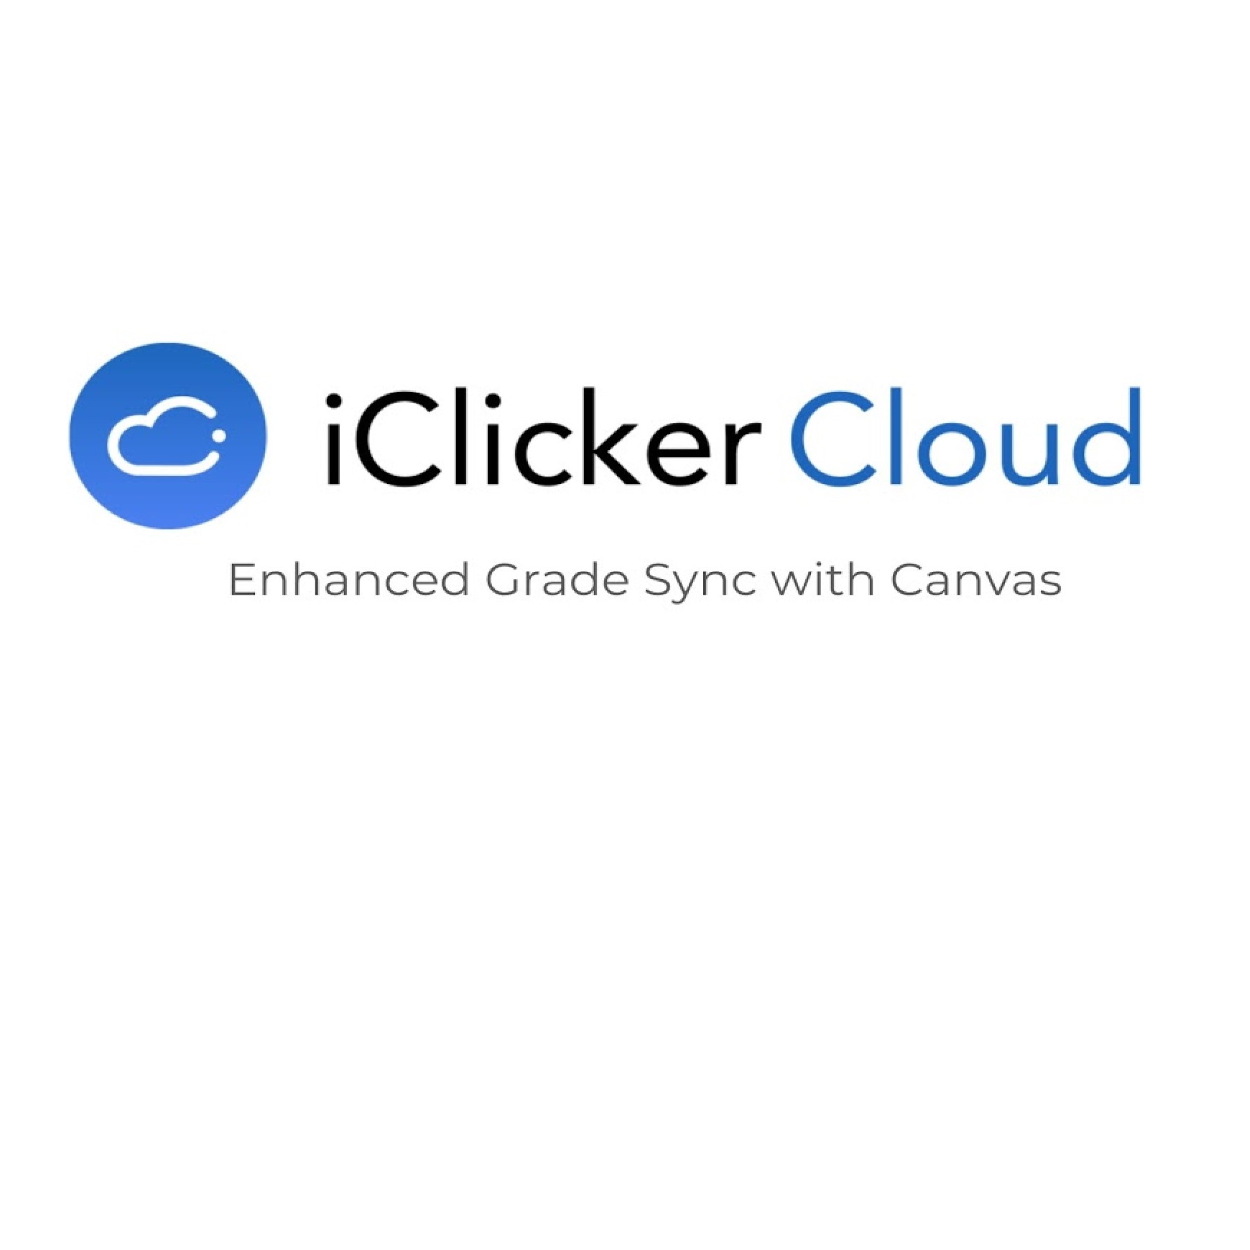 iClicker Cloud has enhanced Grade Sync with Canvas